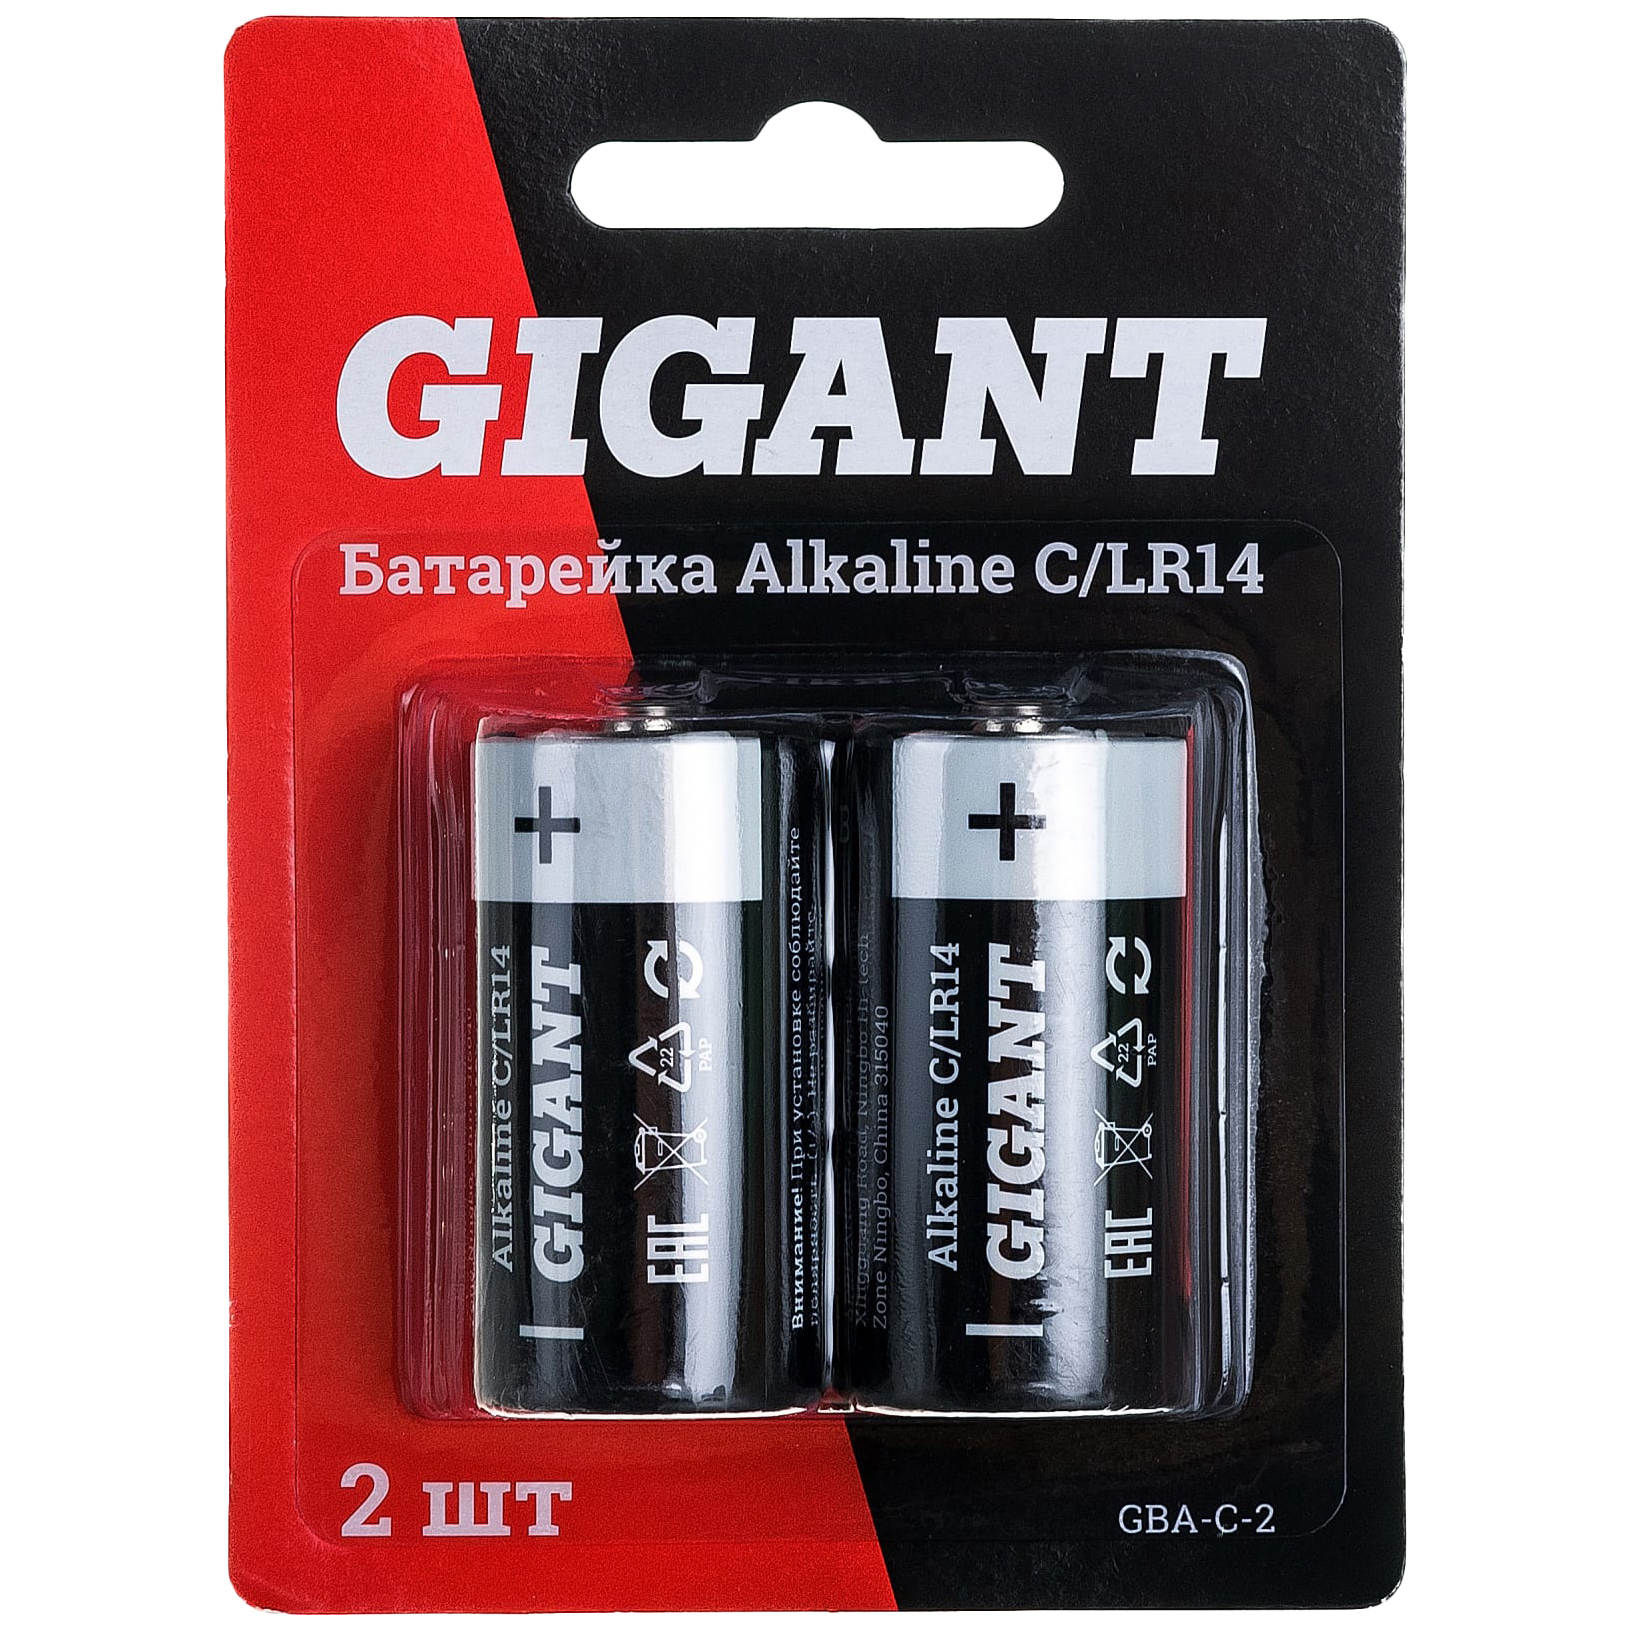 Gigant Батарейка Alkaline C/LR14 блистер 2 шт. GBA-С-2